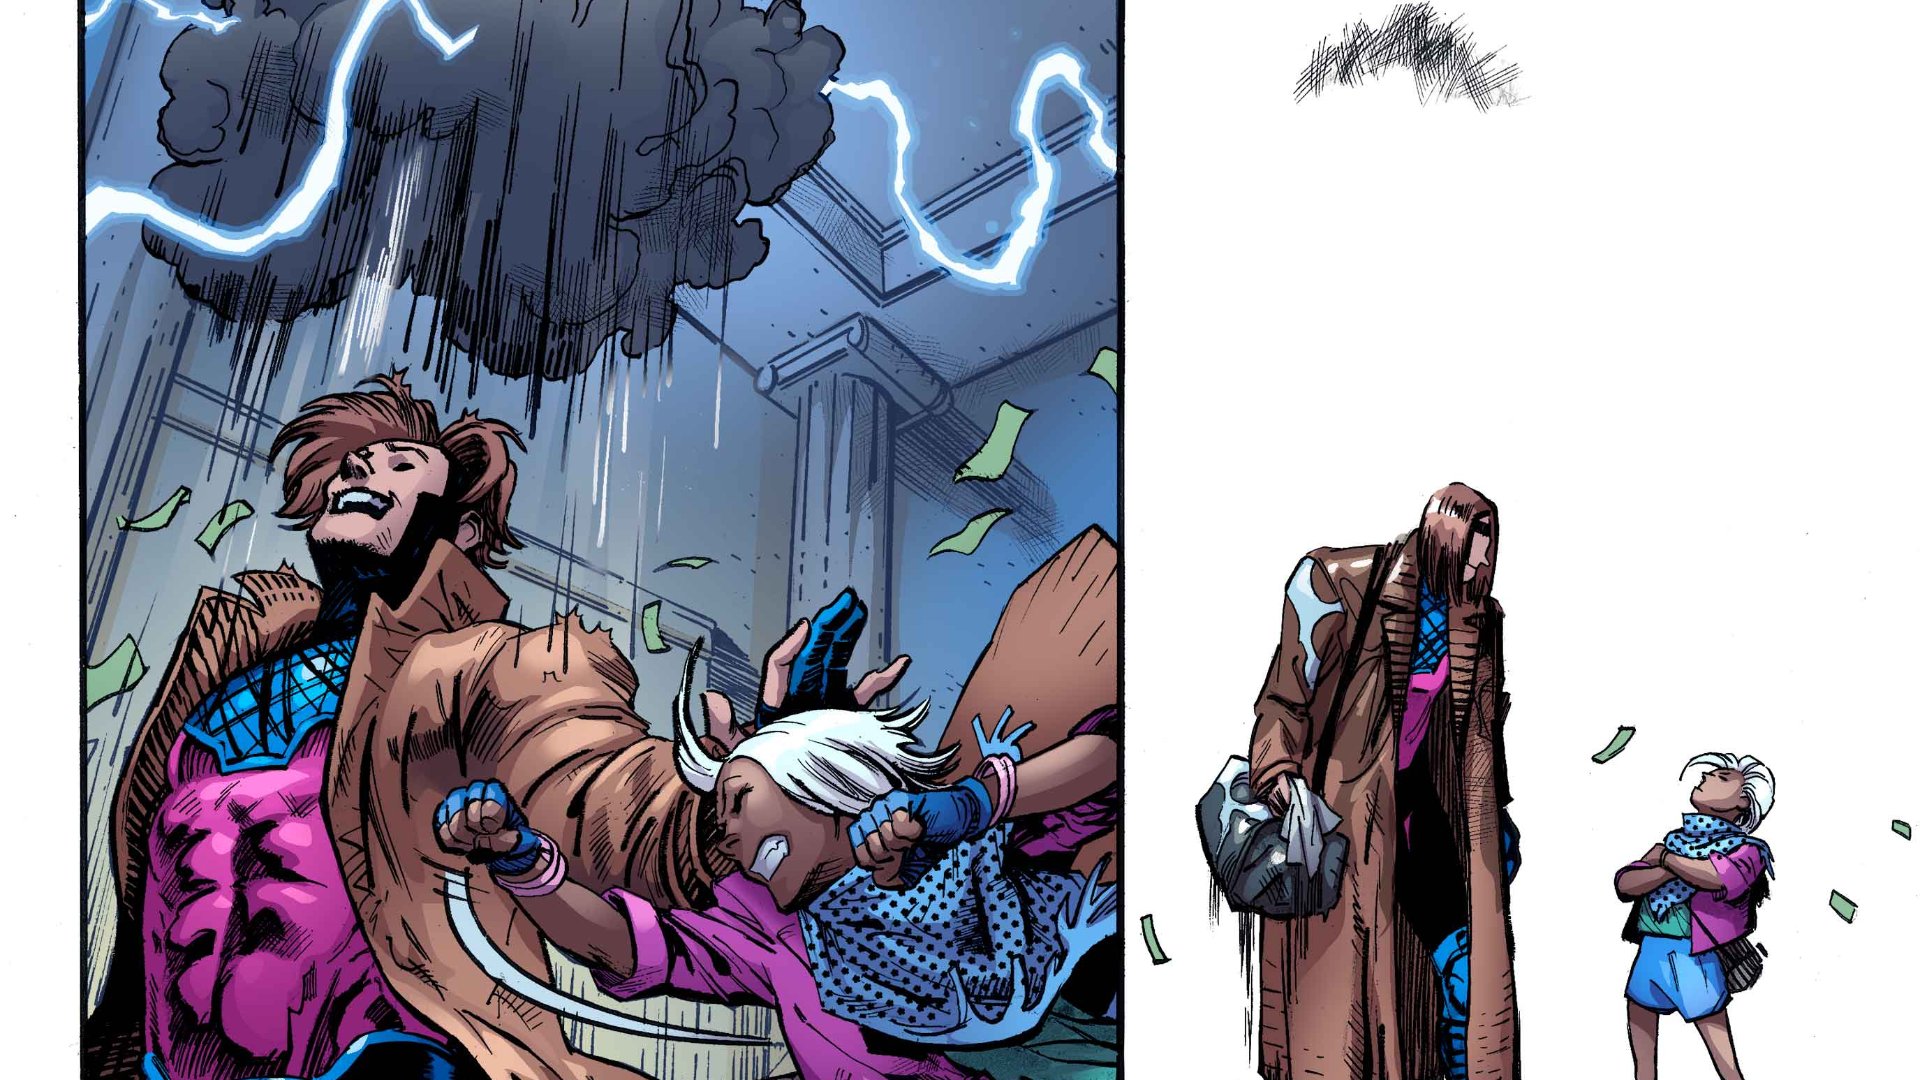 Gambit Reading Order Part 2: Early 90's X-Men Comics